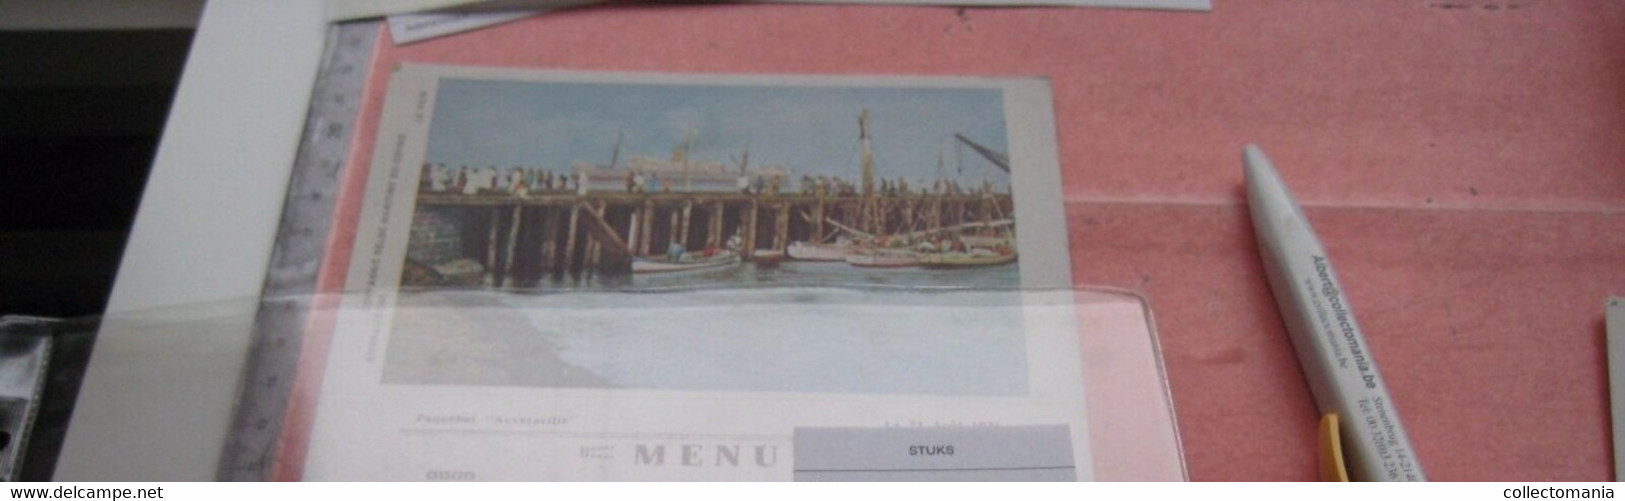 Authentic Menu Card, 1921 Congo Boat ANVERSVILLE, 20cmX13,8cm, MATADI Cows VG -  5 March 1921   DEJEUNER = Breakfast - Menus